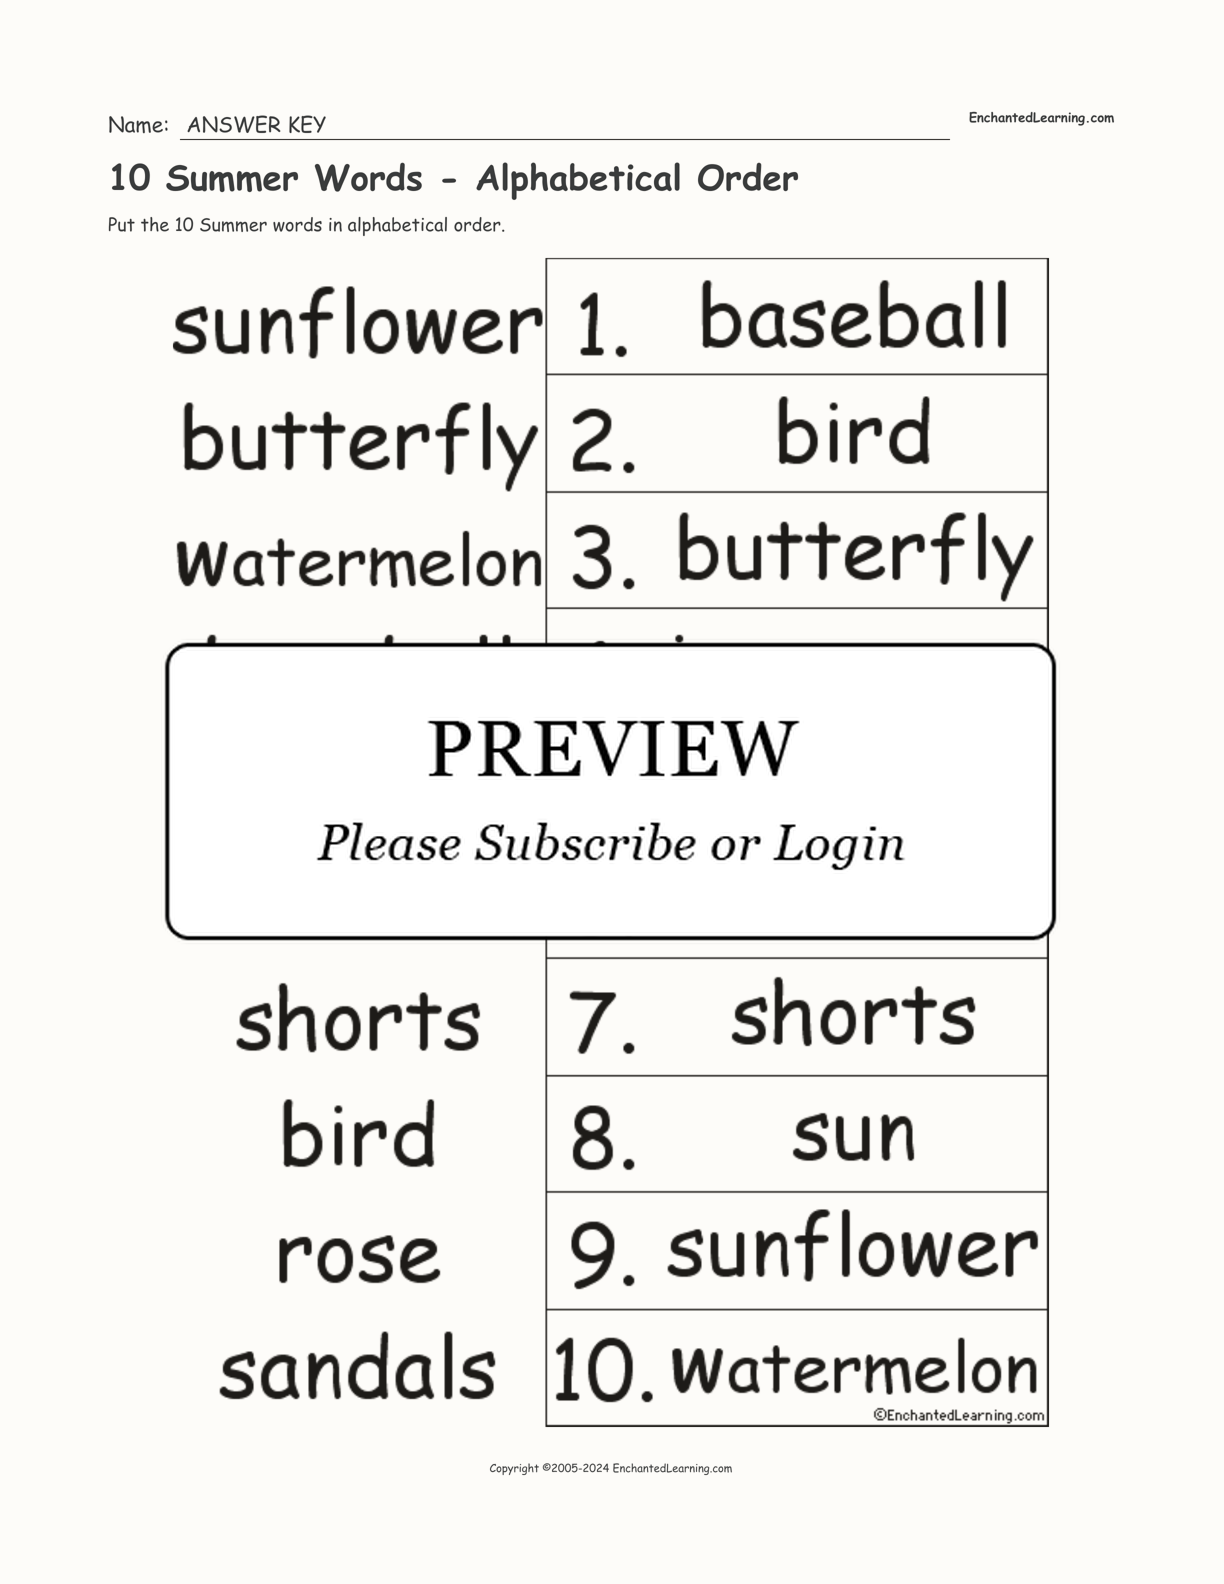 10 Summer Words - Alphabetical Order interactive worksheet page 2